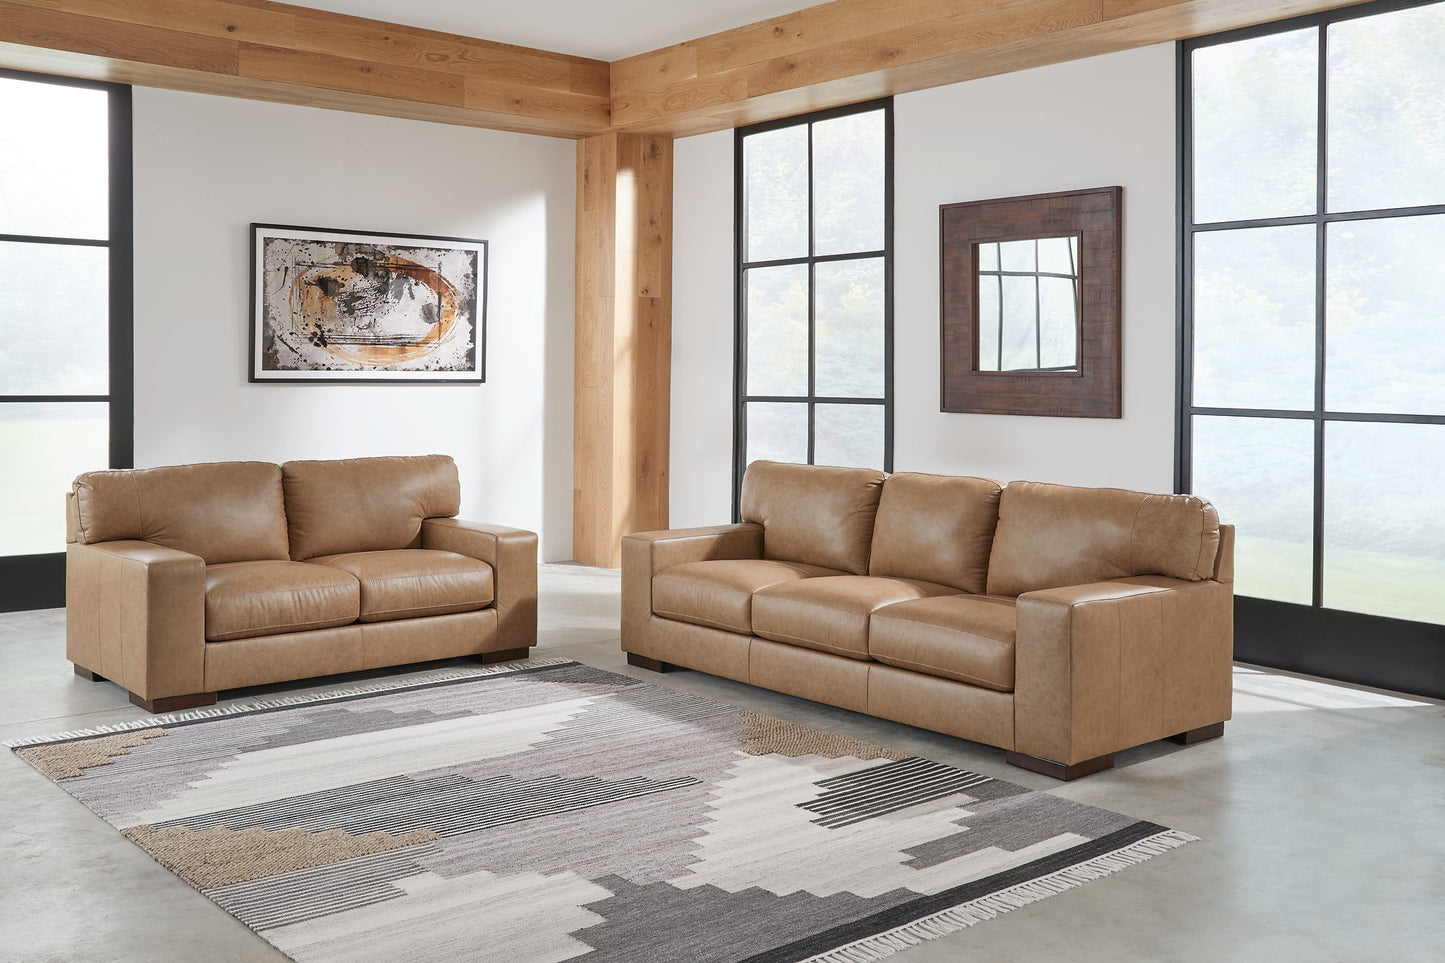 Lombardia Sofa and Loveseat at Cloud 9 Mattress & Furniture furniture, home furnishing, home decor